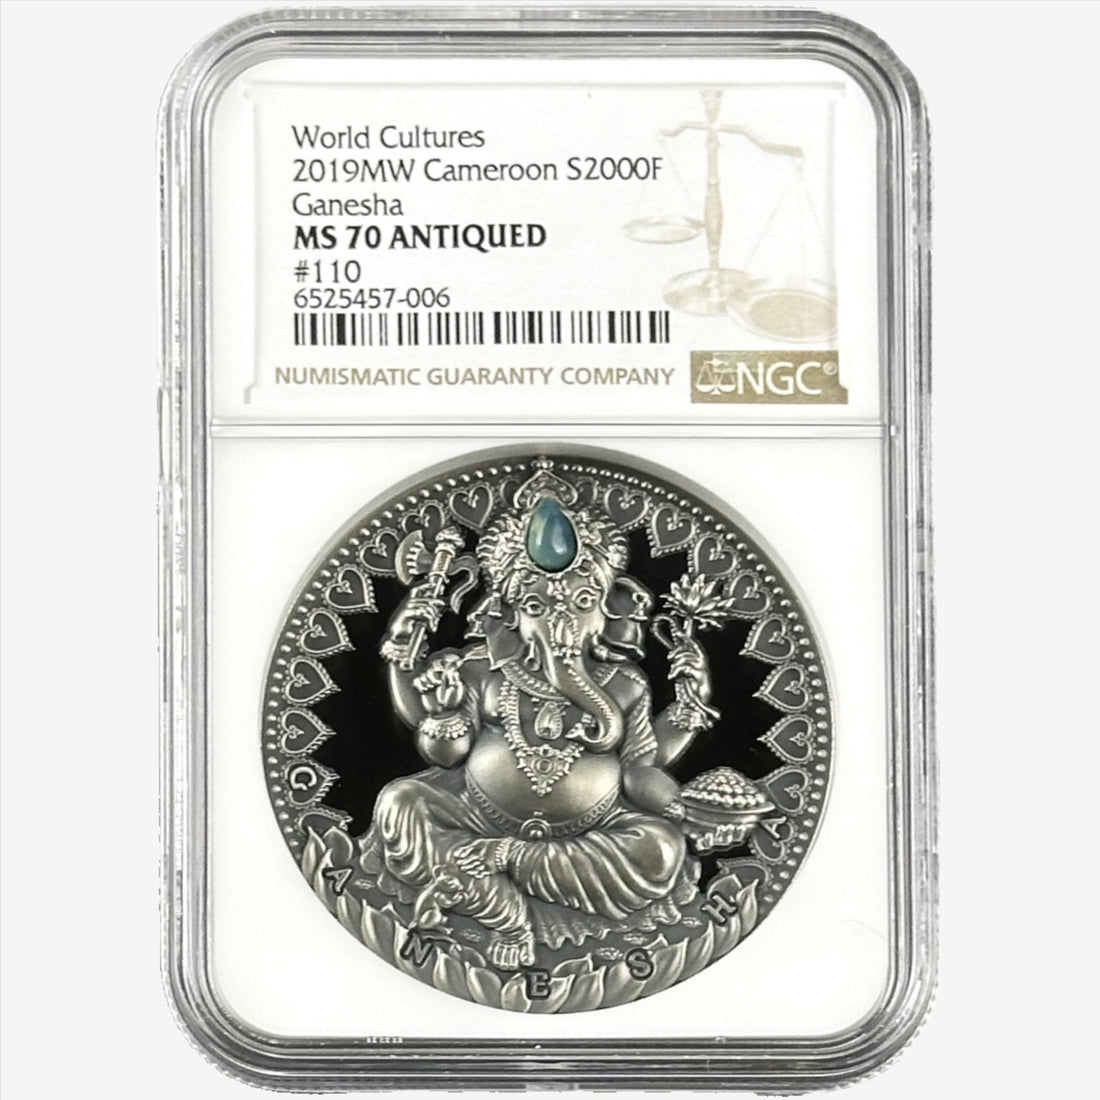 2019 2 oz GANESHA Silver Coin MS 70 World Cultures - Cameroon - OZB